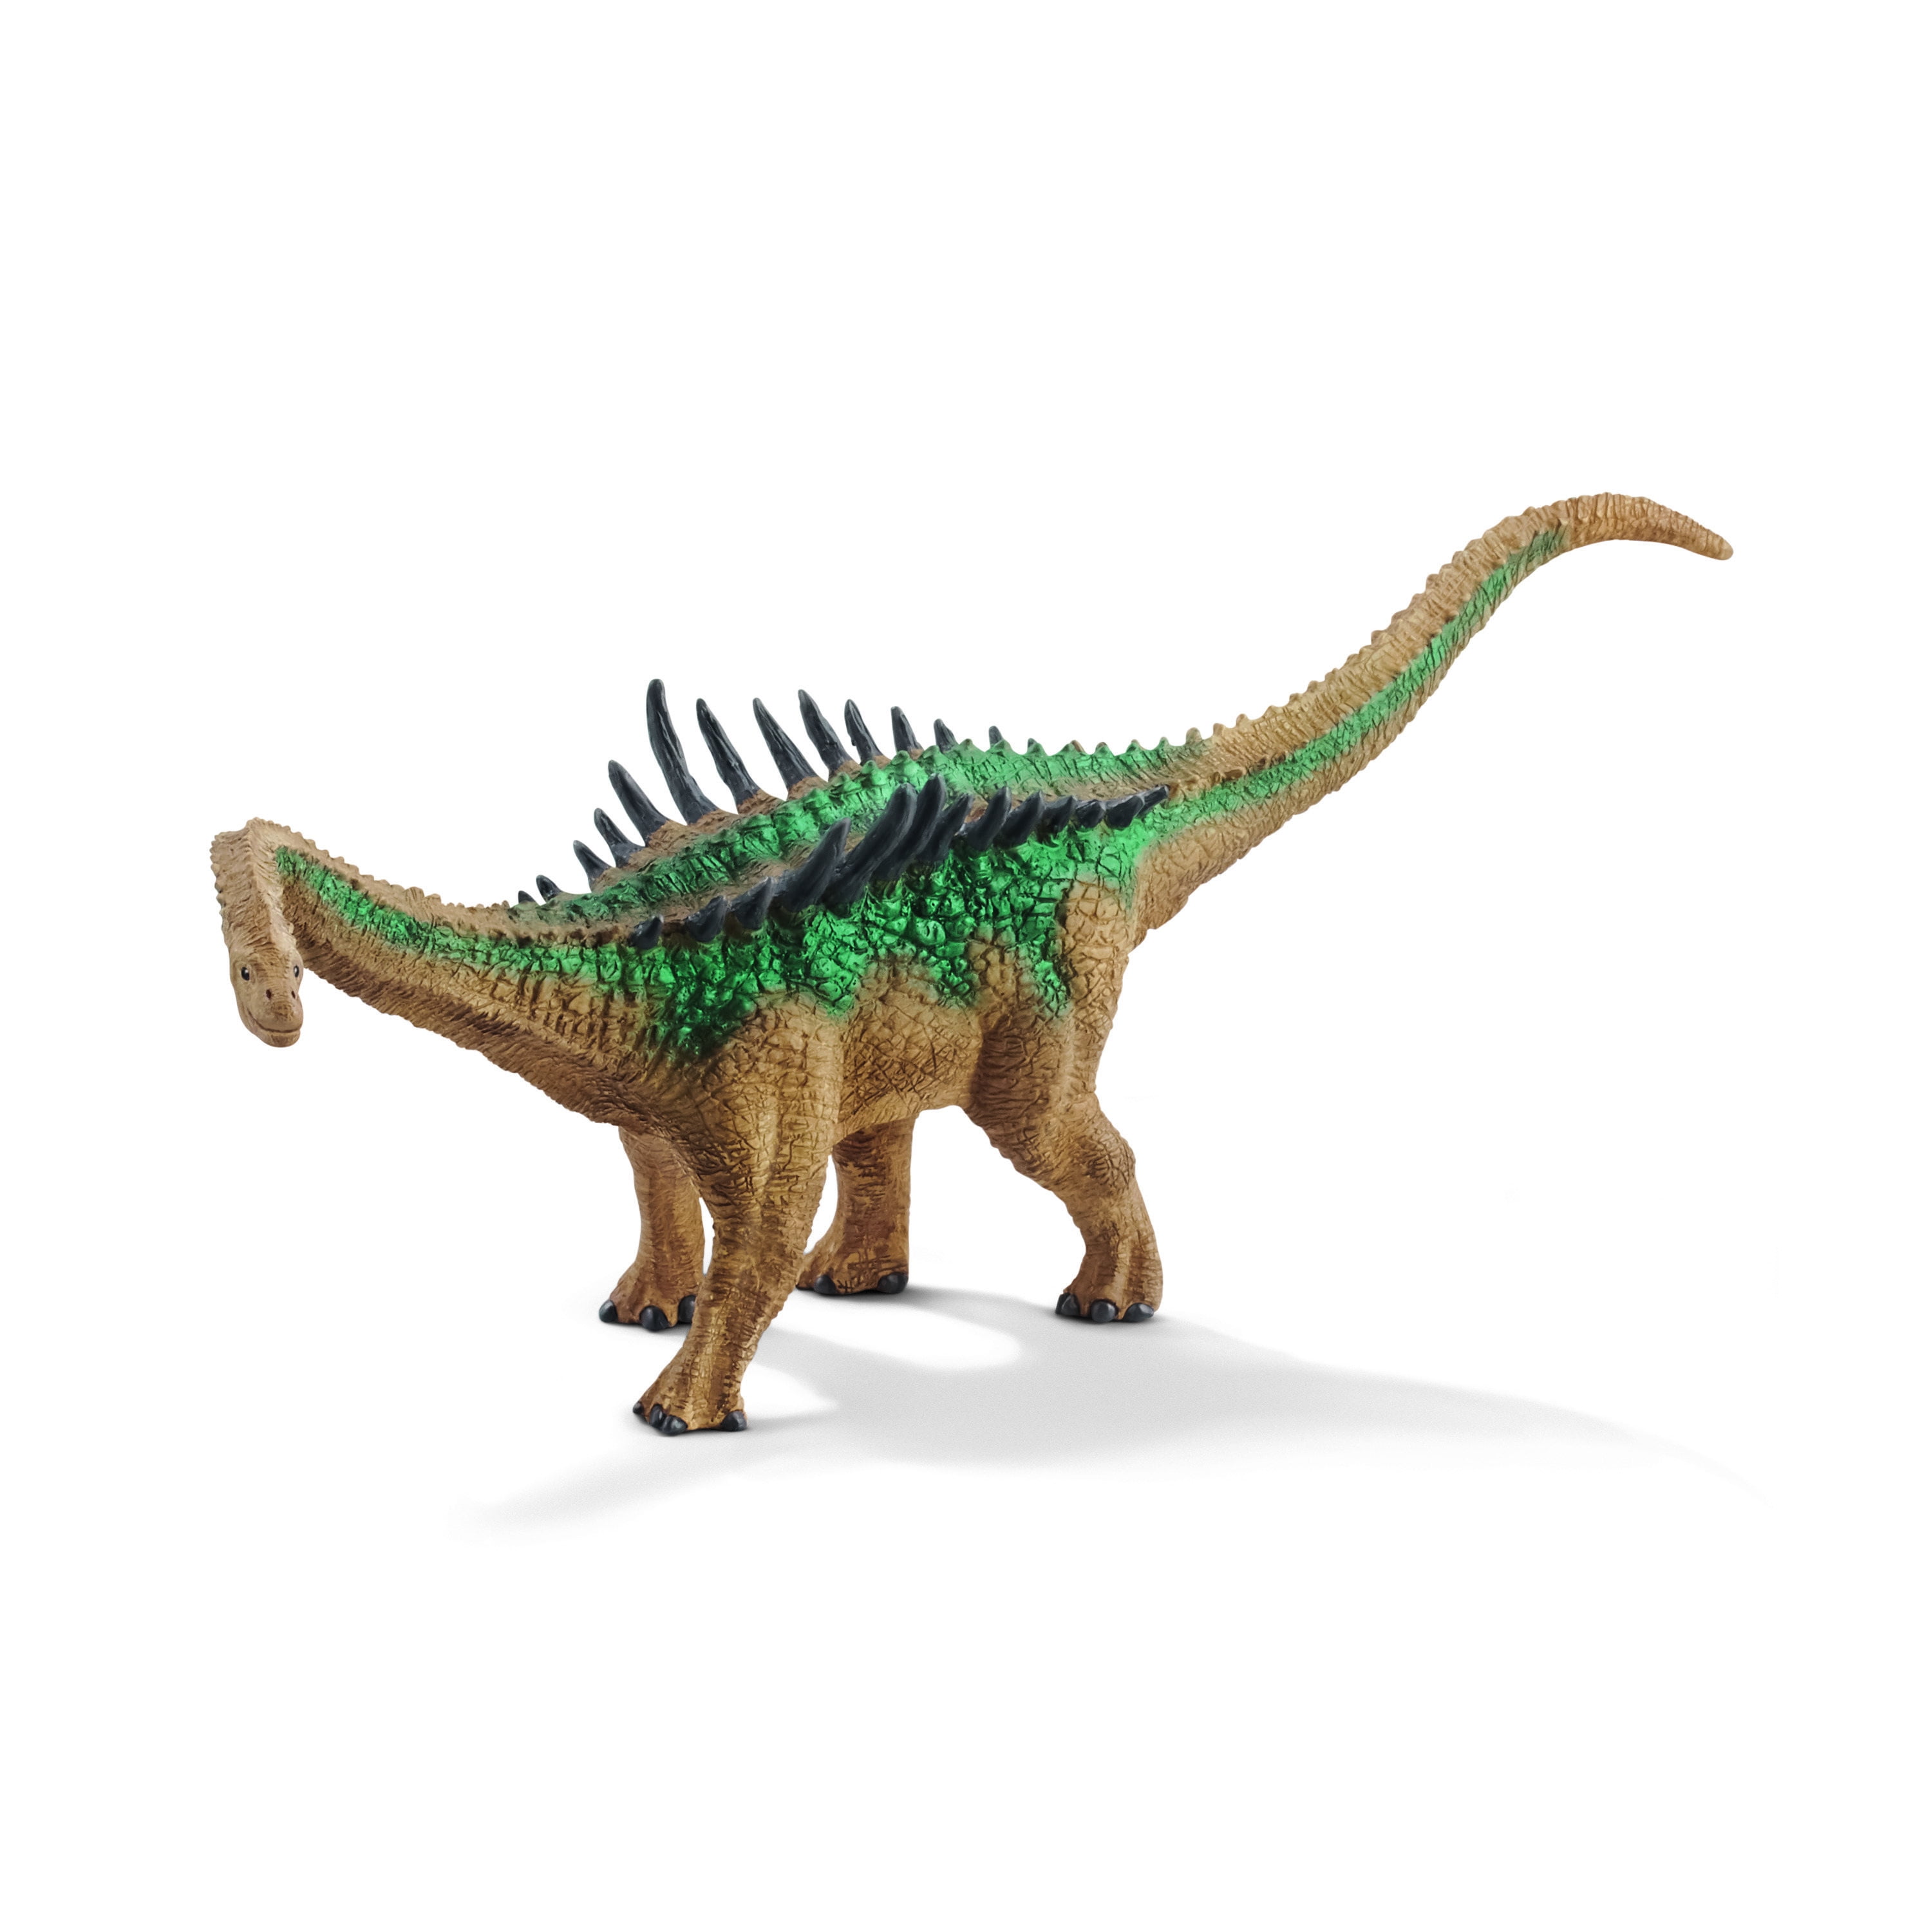 Schleich ANKYLOSAURUS solid plastic toy DINOSAUR Jurassic animal NEW